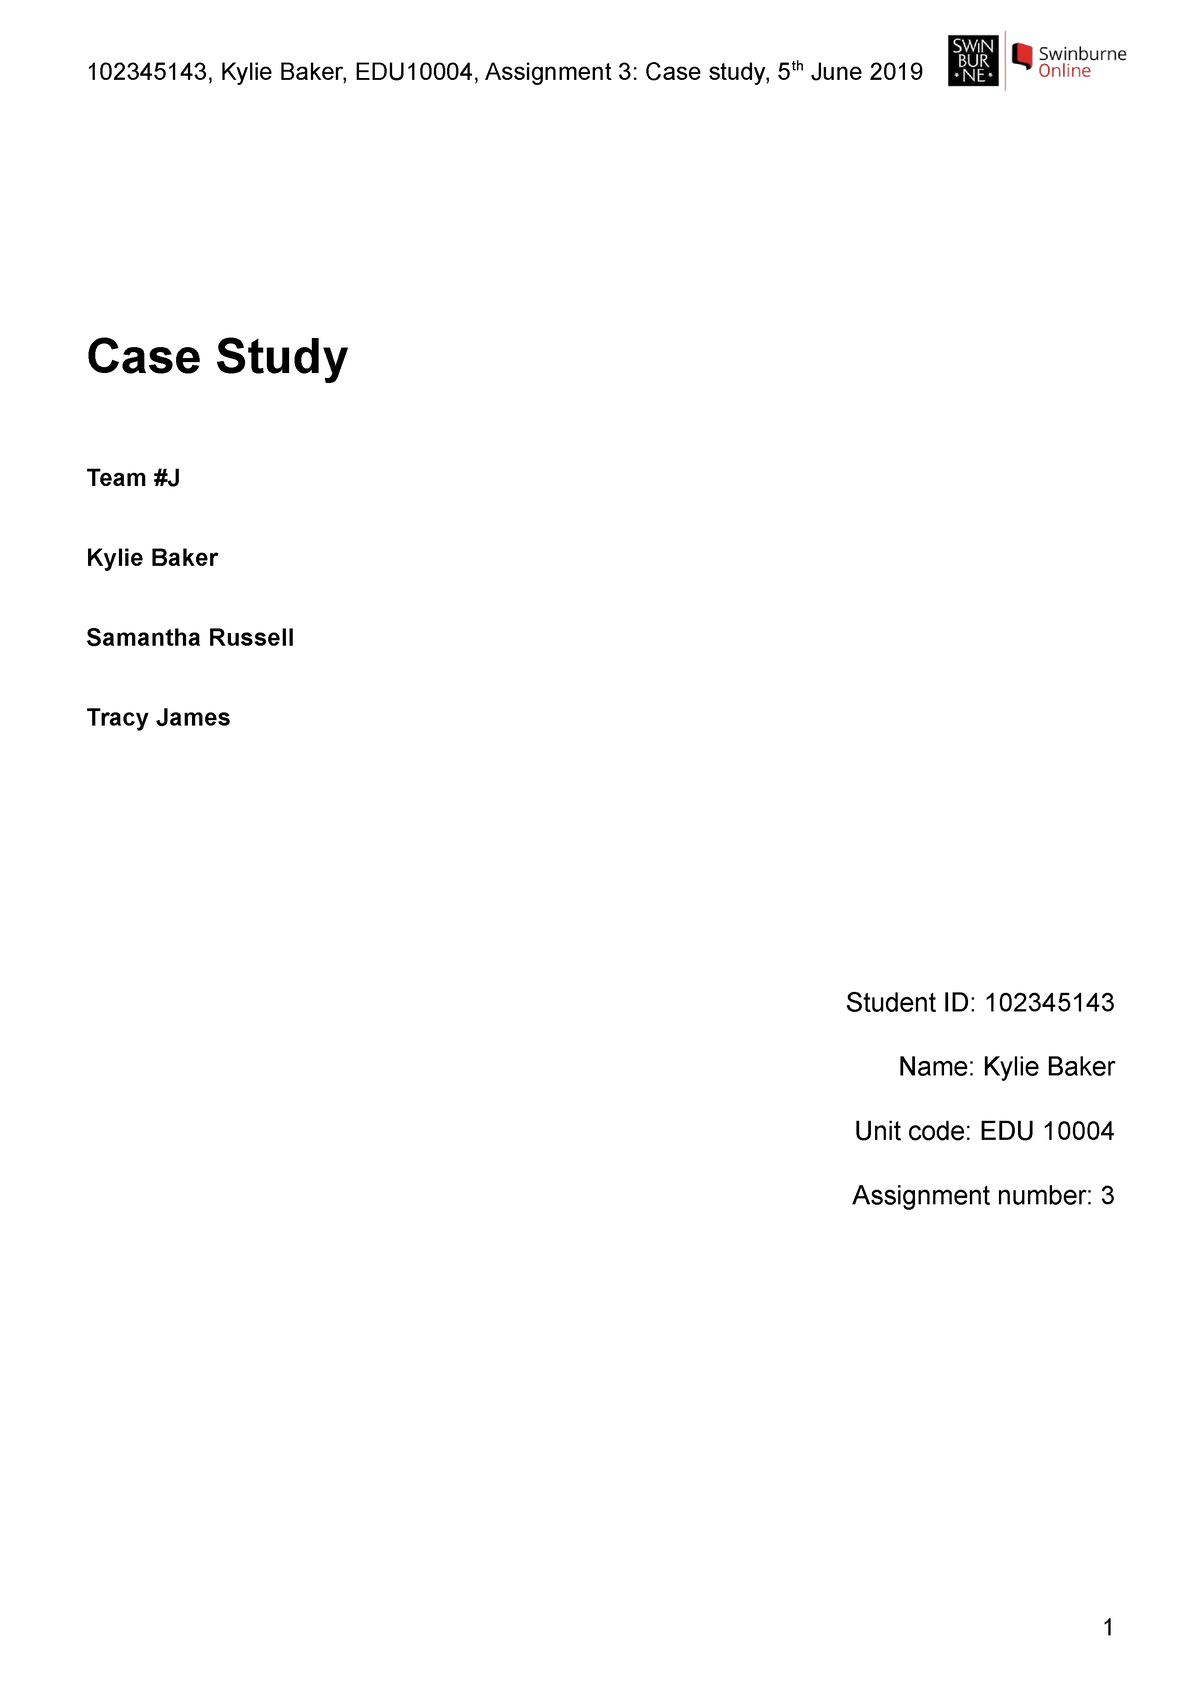 edu10004 assignment 3 case study